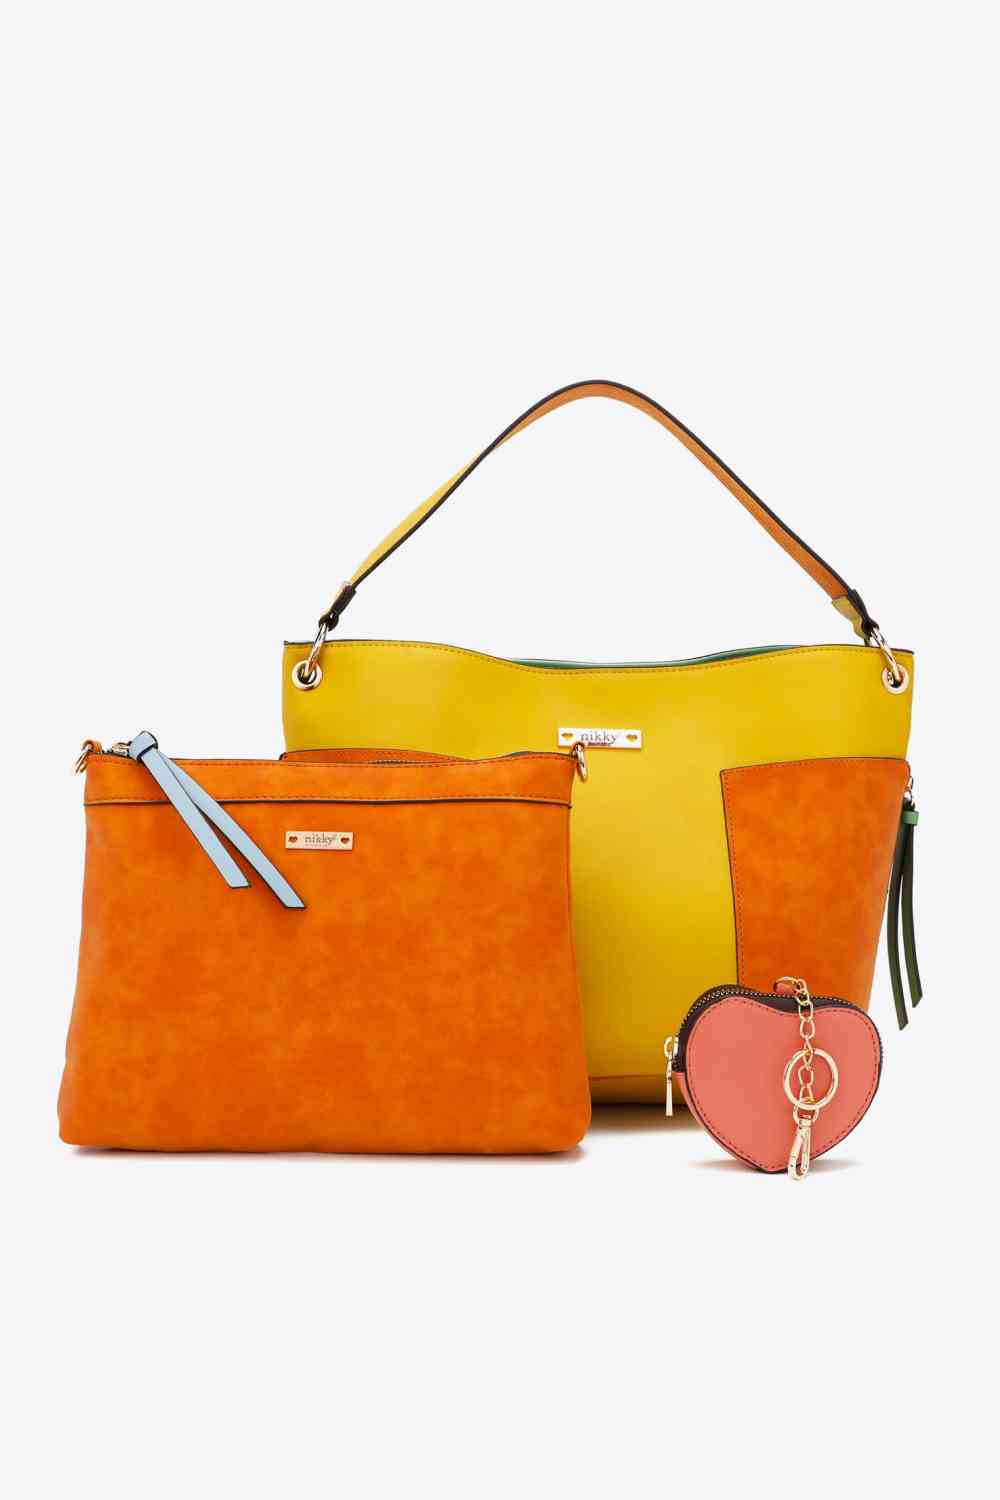 Nicole Lee USA Sweetheart Handbag 3PC Set Women's Accessories, See All Colors!